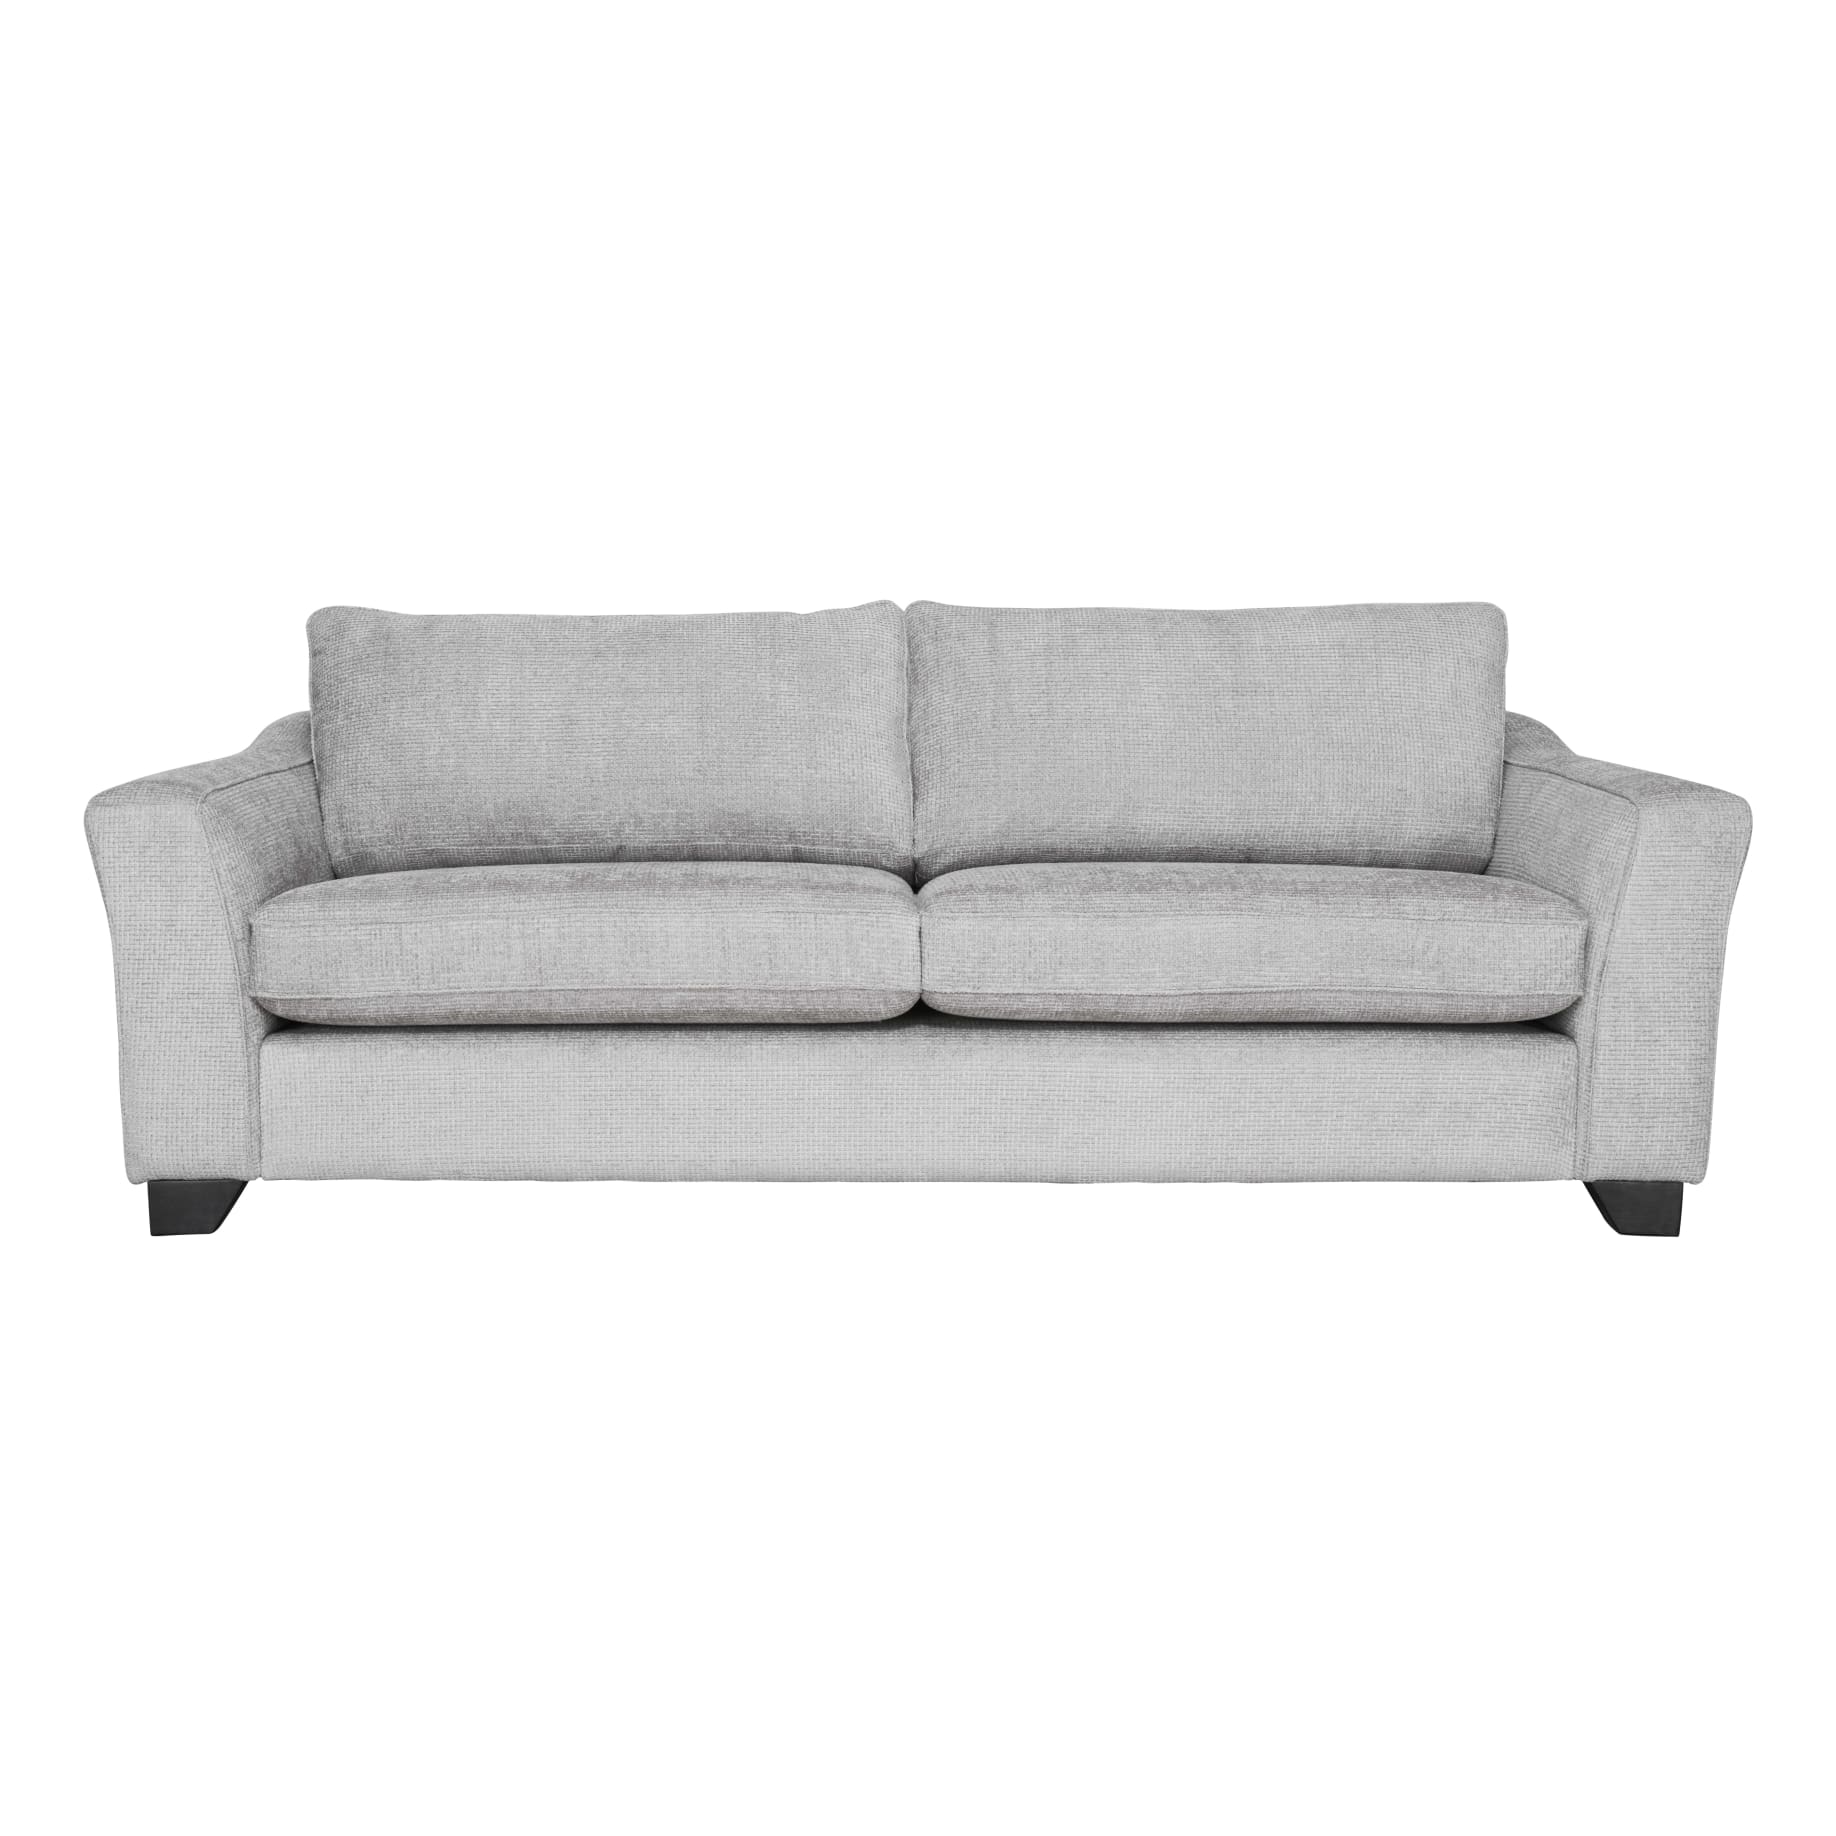 Sloane 3 Seater Sofa in Selected Fabrics